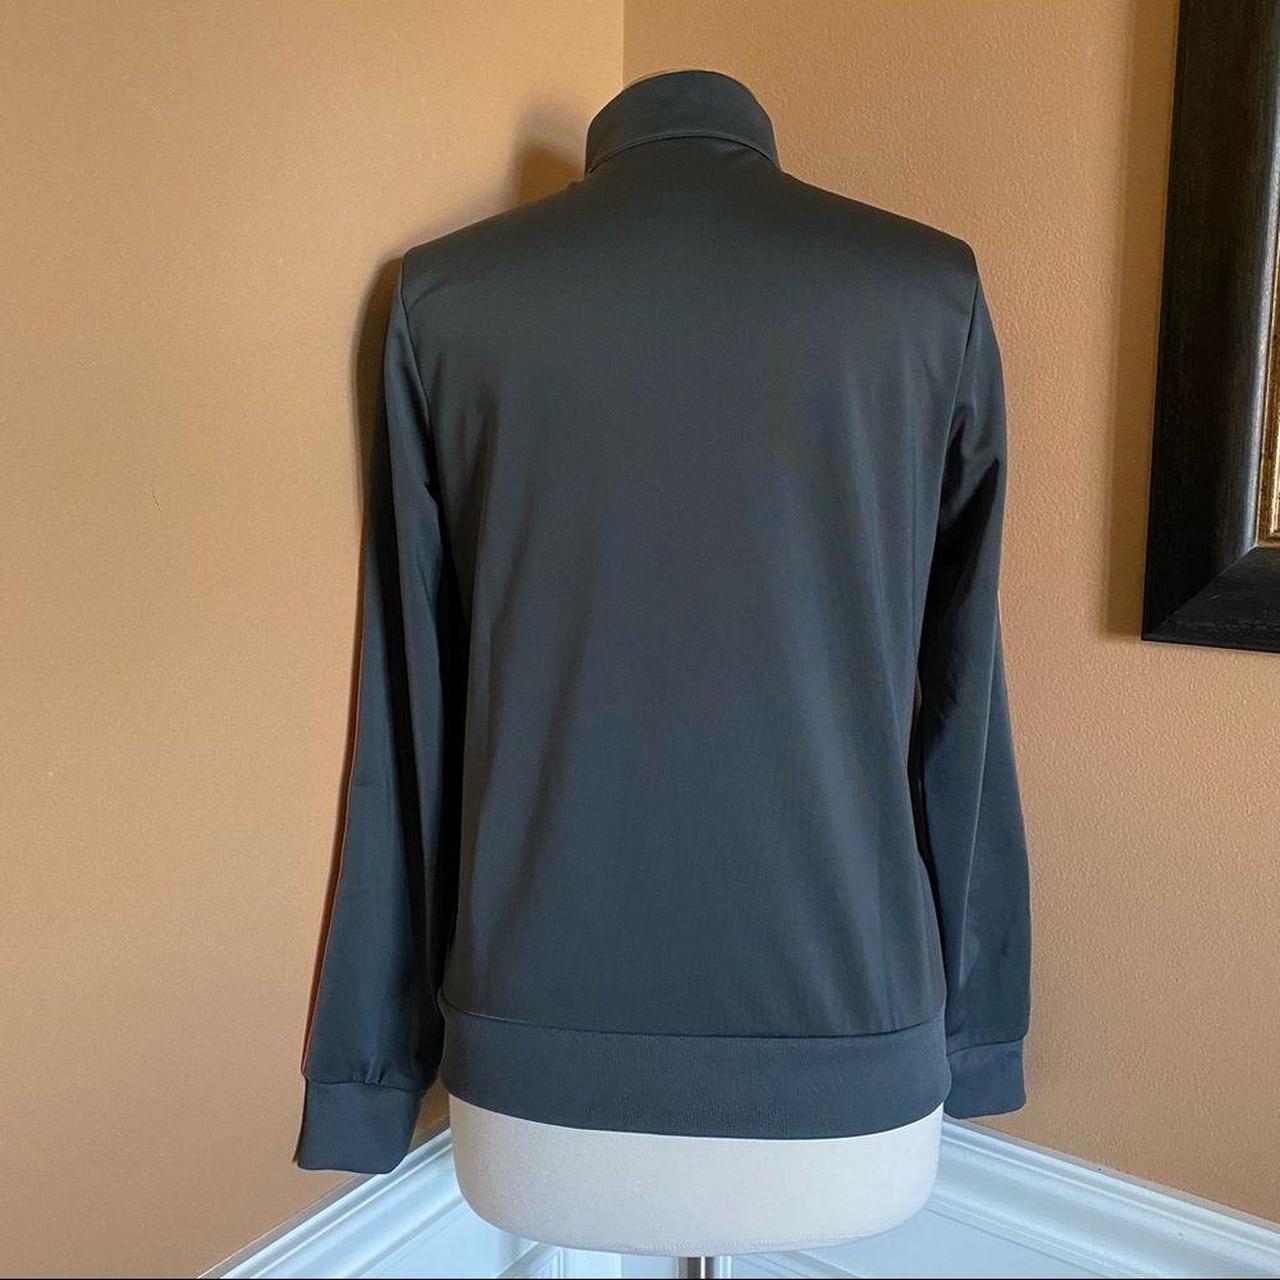 Product Image 4 - Adidas essential tricot jacket dark